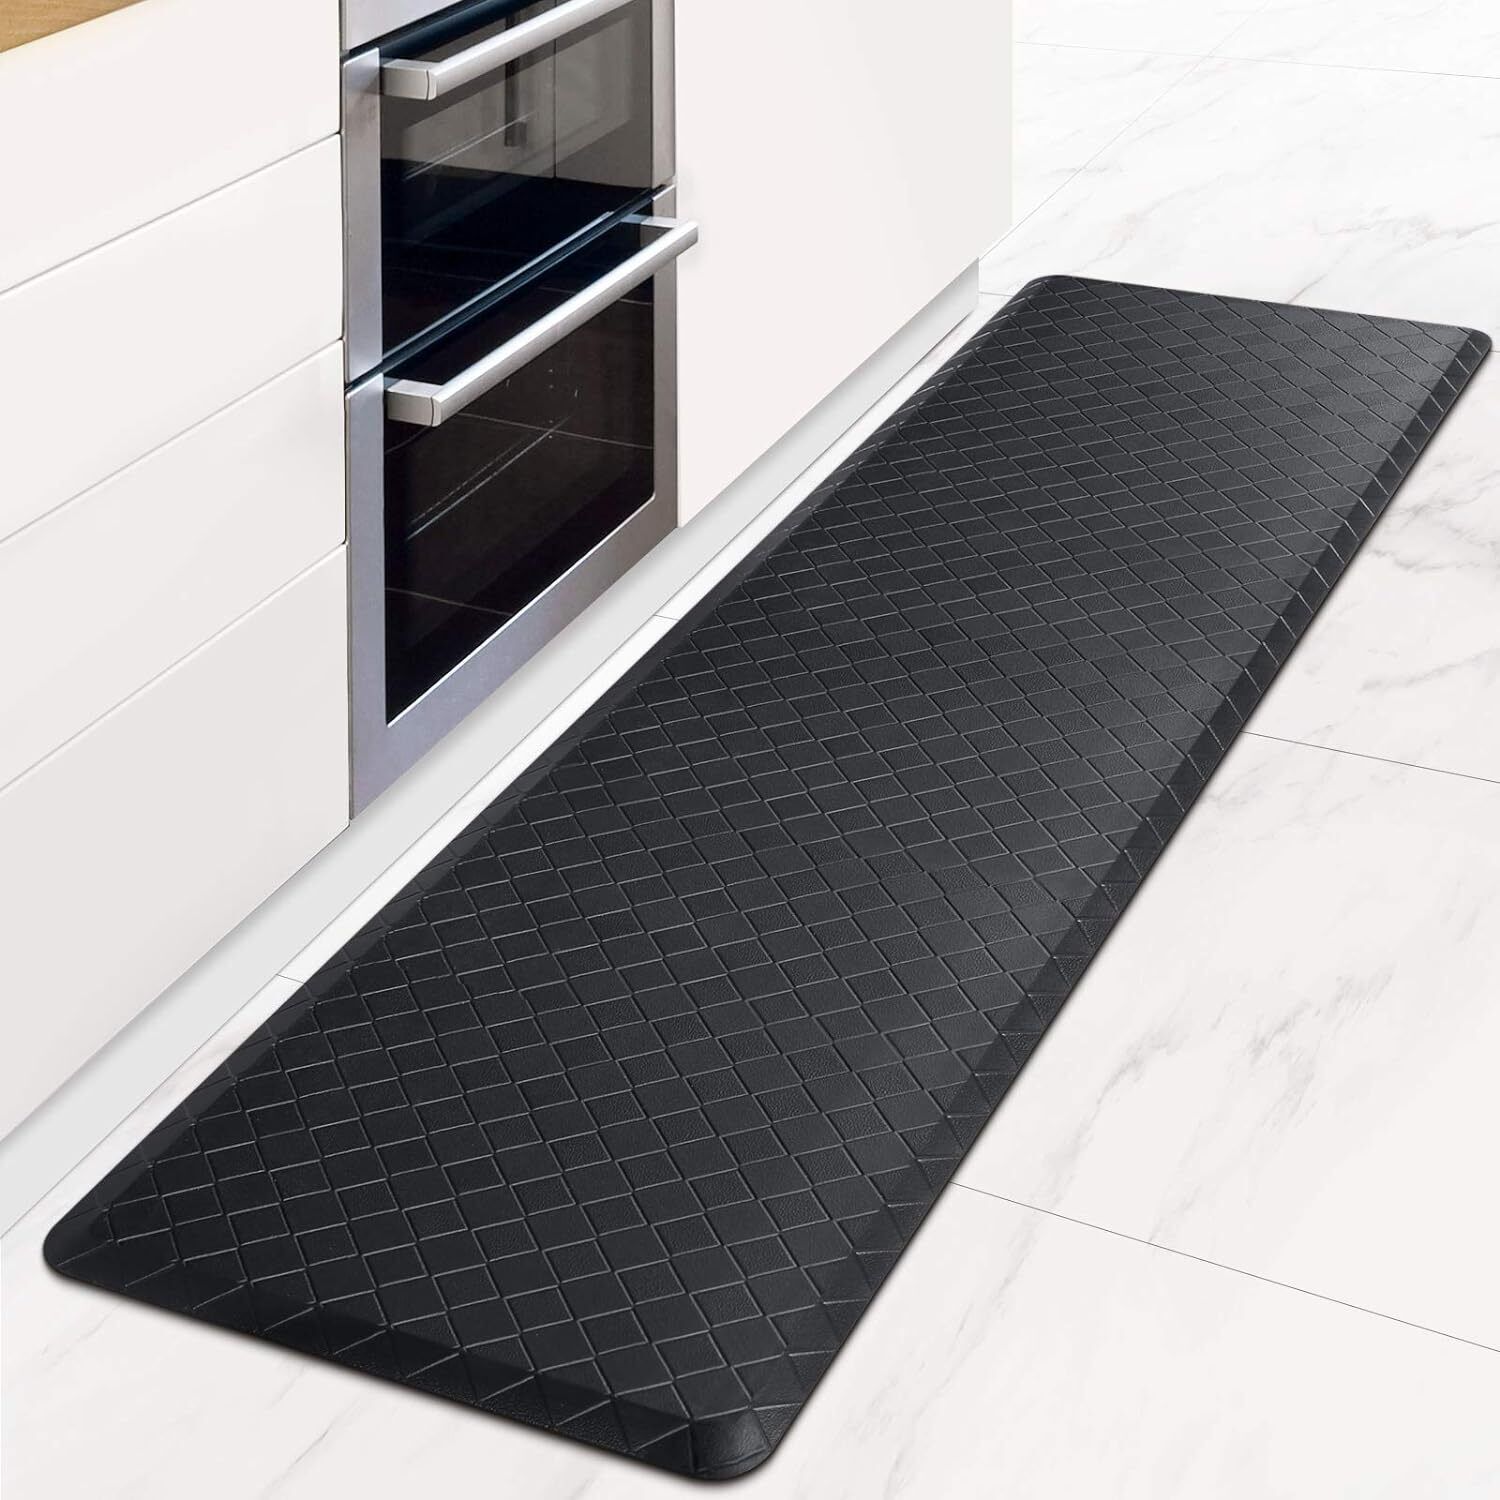 New Kitchen Mat Cushioned Anti-Fatigue Floor Mat Non-Slip Heavy Duty Home Hotel